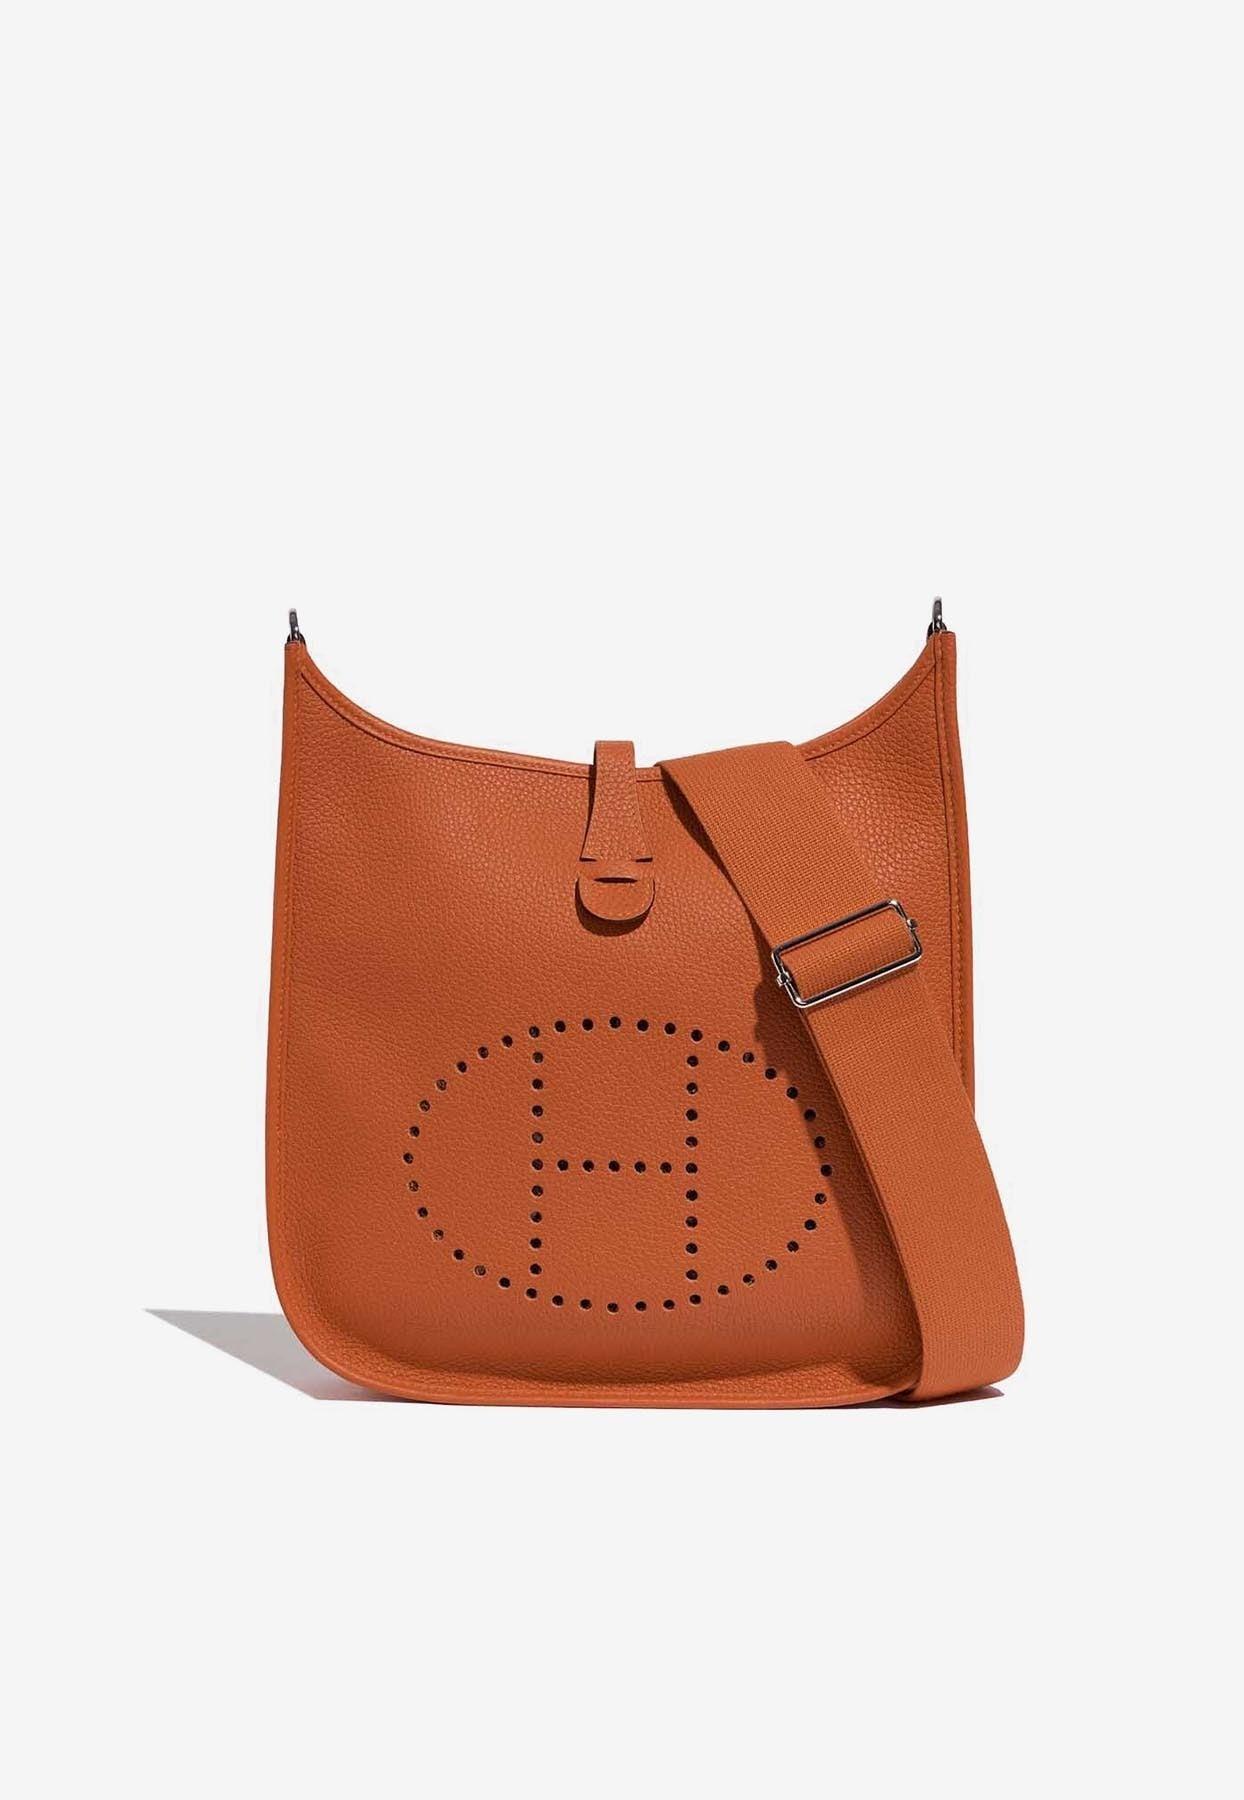 Hermes Evelyne Bag in Brown (Tan) or Orange? Same dilemma/ flip as